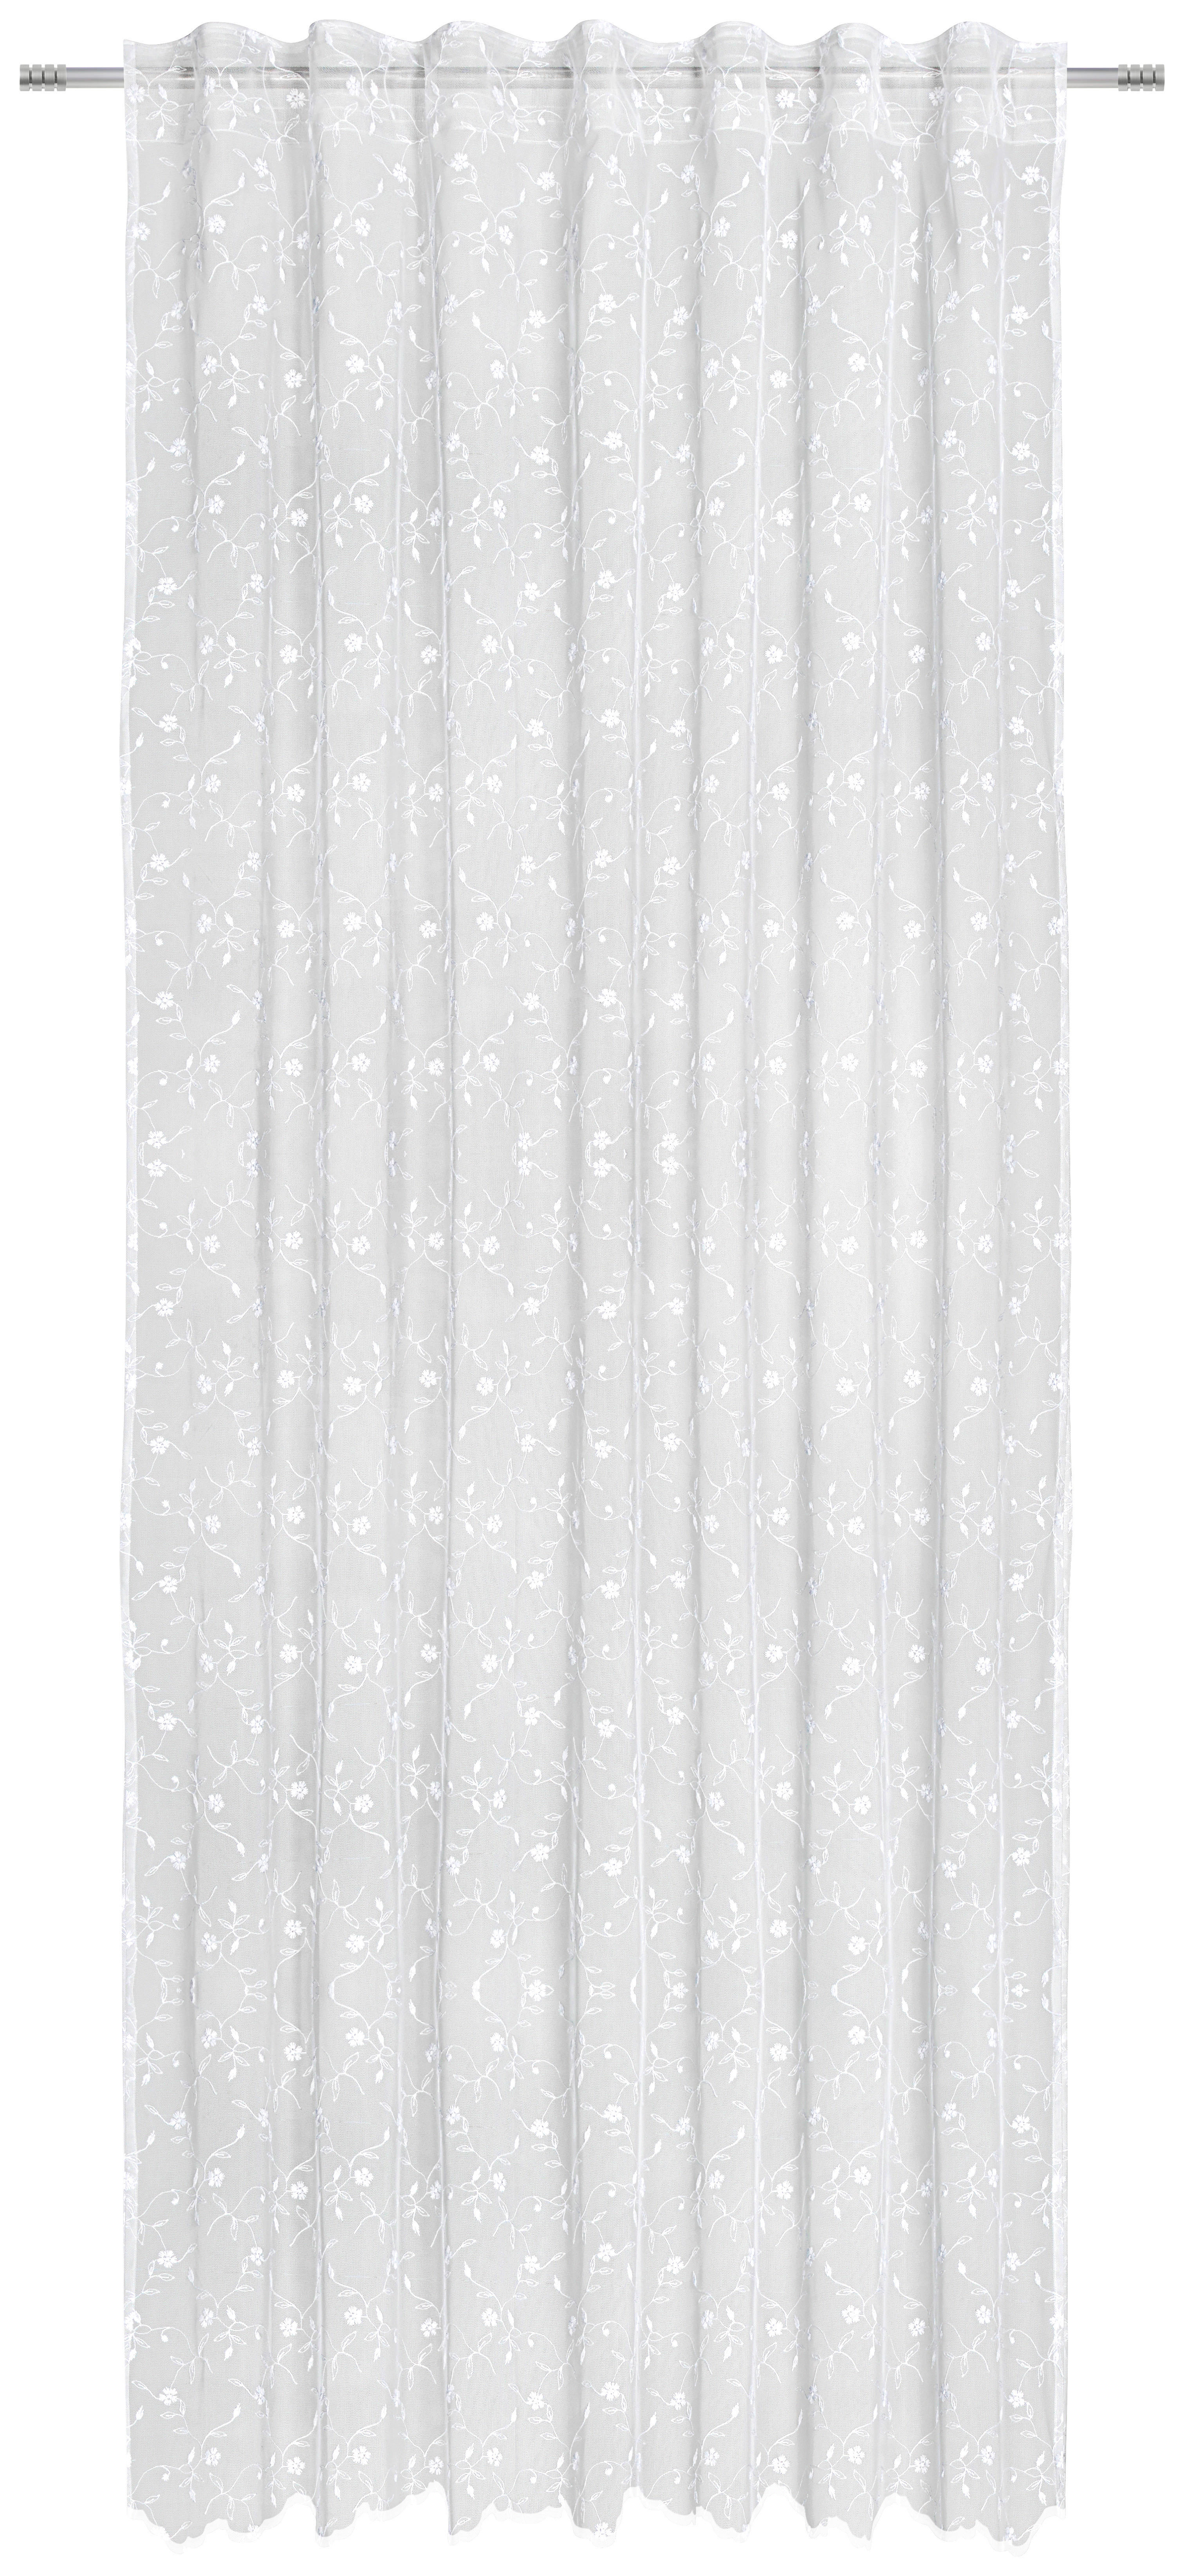 FERTIGVORHANG TATJANA transparent 140/245 cm   - Weiß, LIFESTYLE, Textil (140/245cm) - Landscape